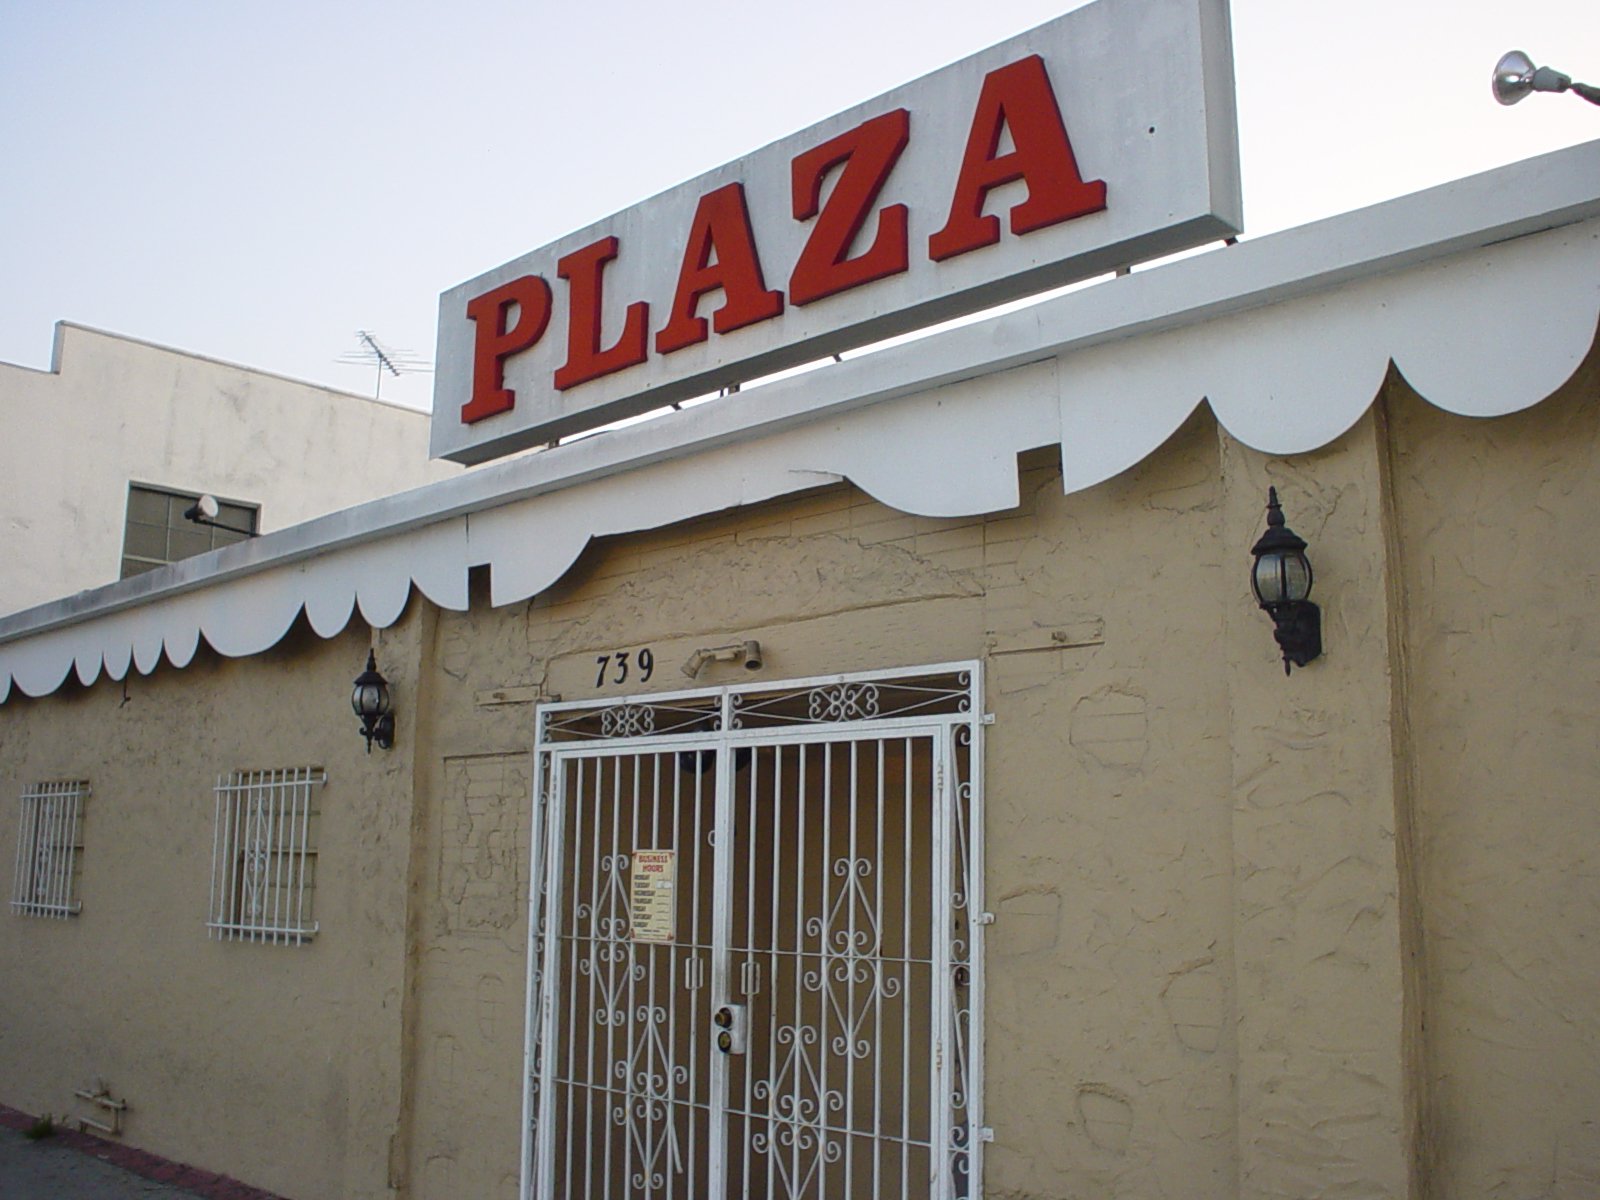 Member Plaza in Los Angeles CA